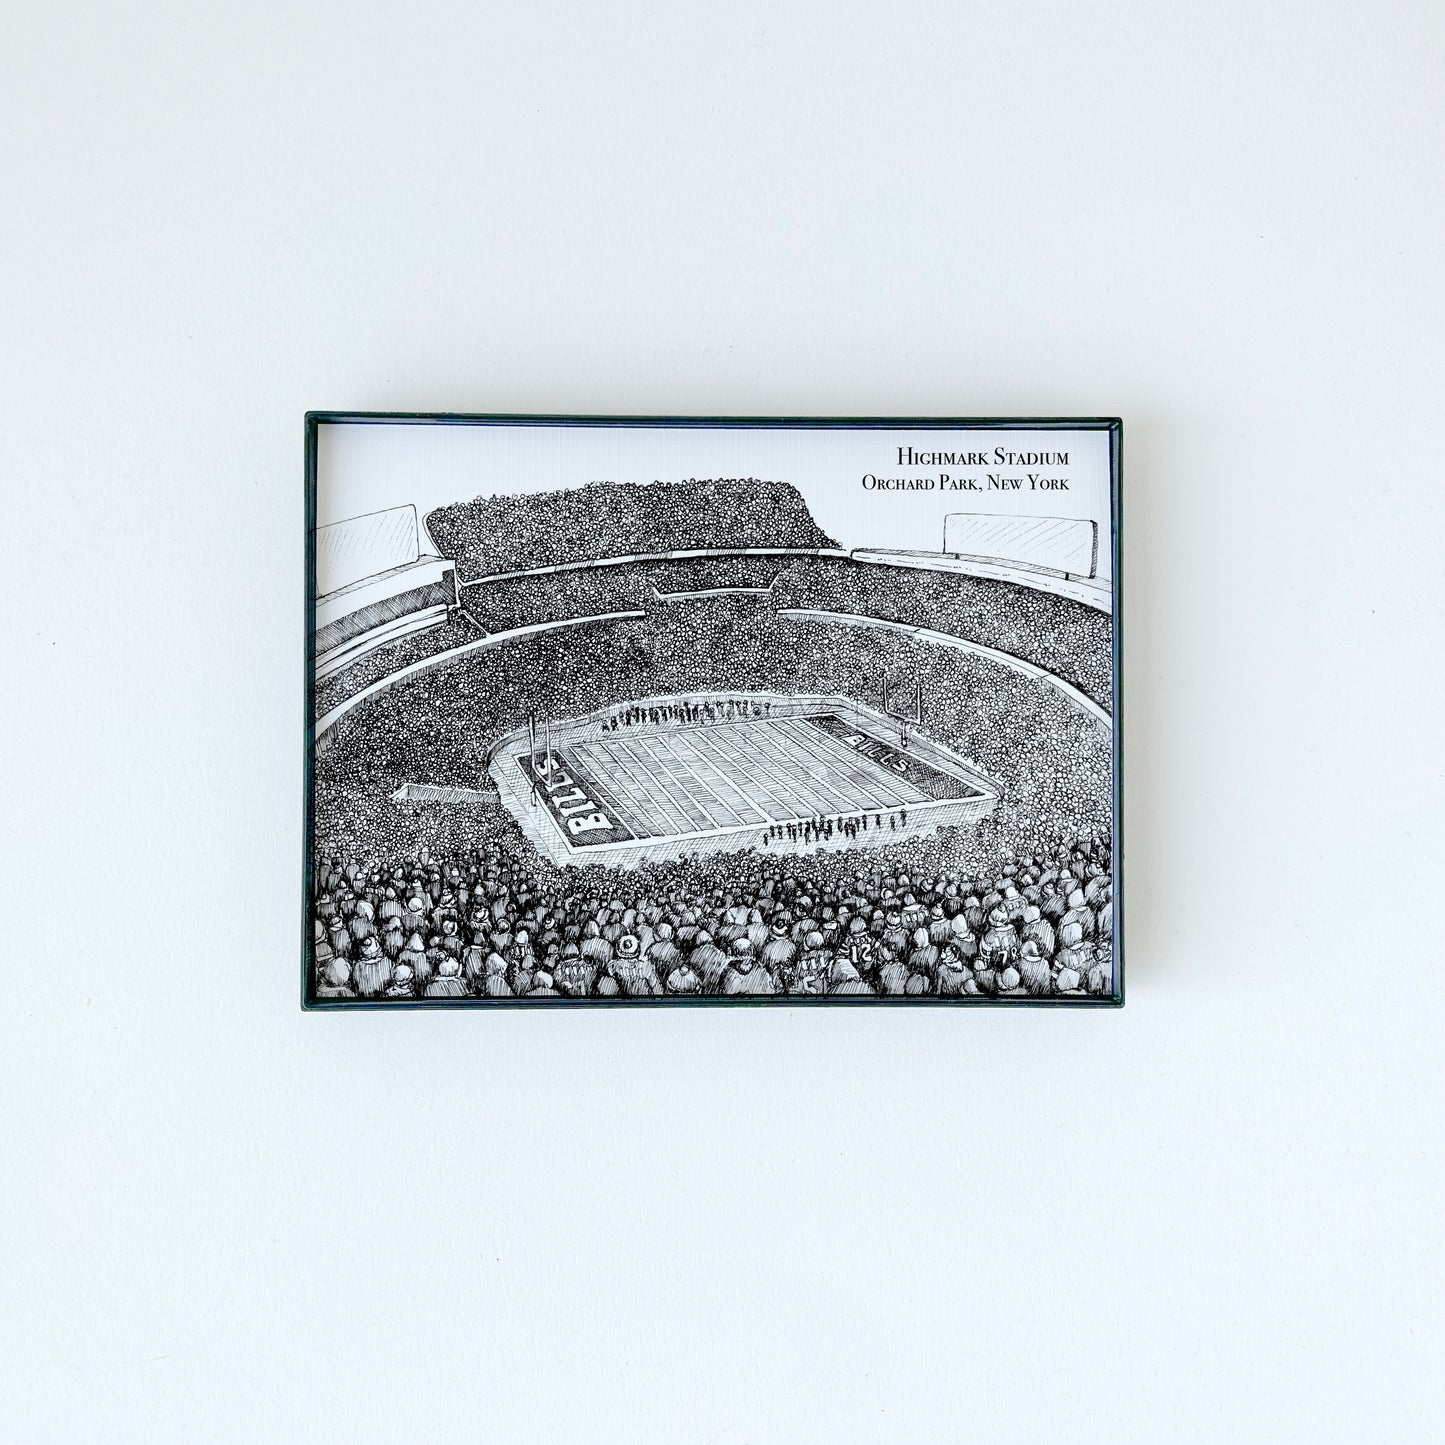 Highmark Stadium illustration in black ink on white paper by Rust Belt Love